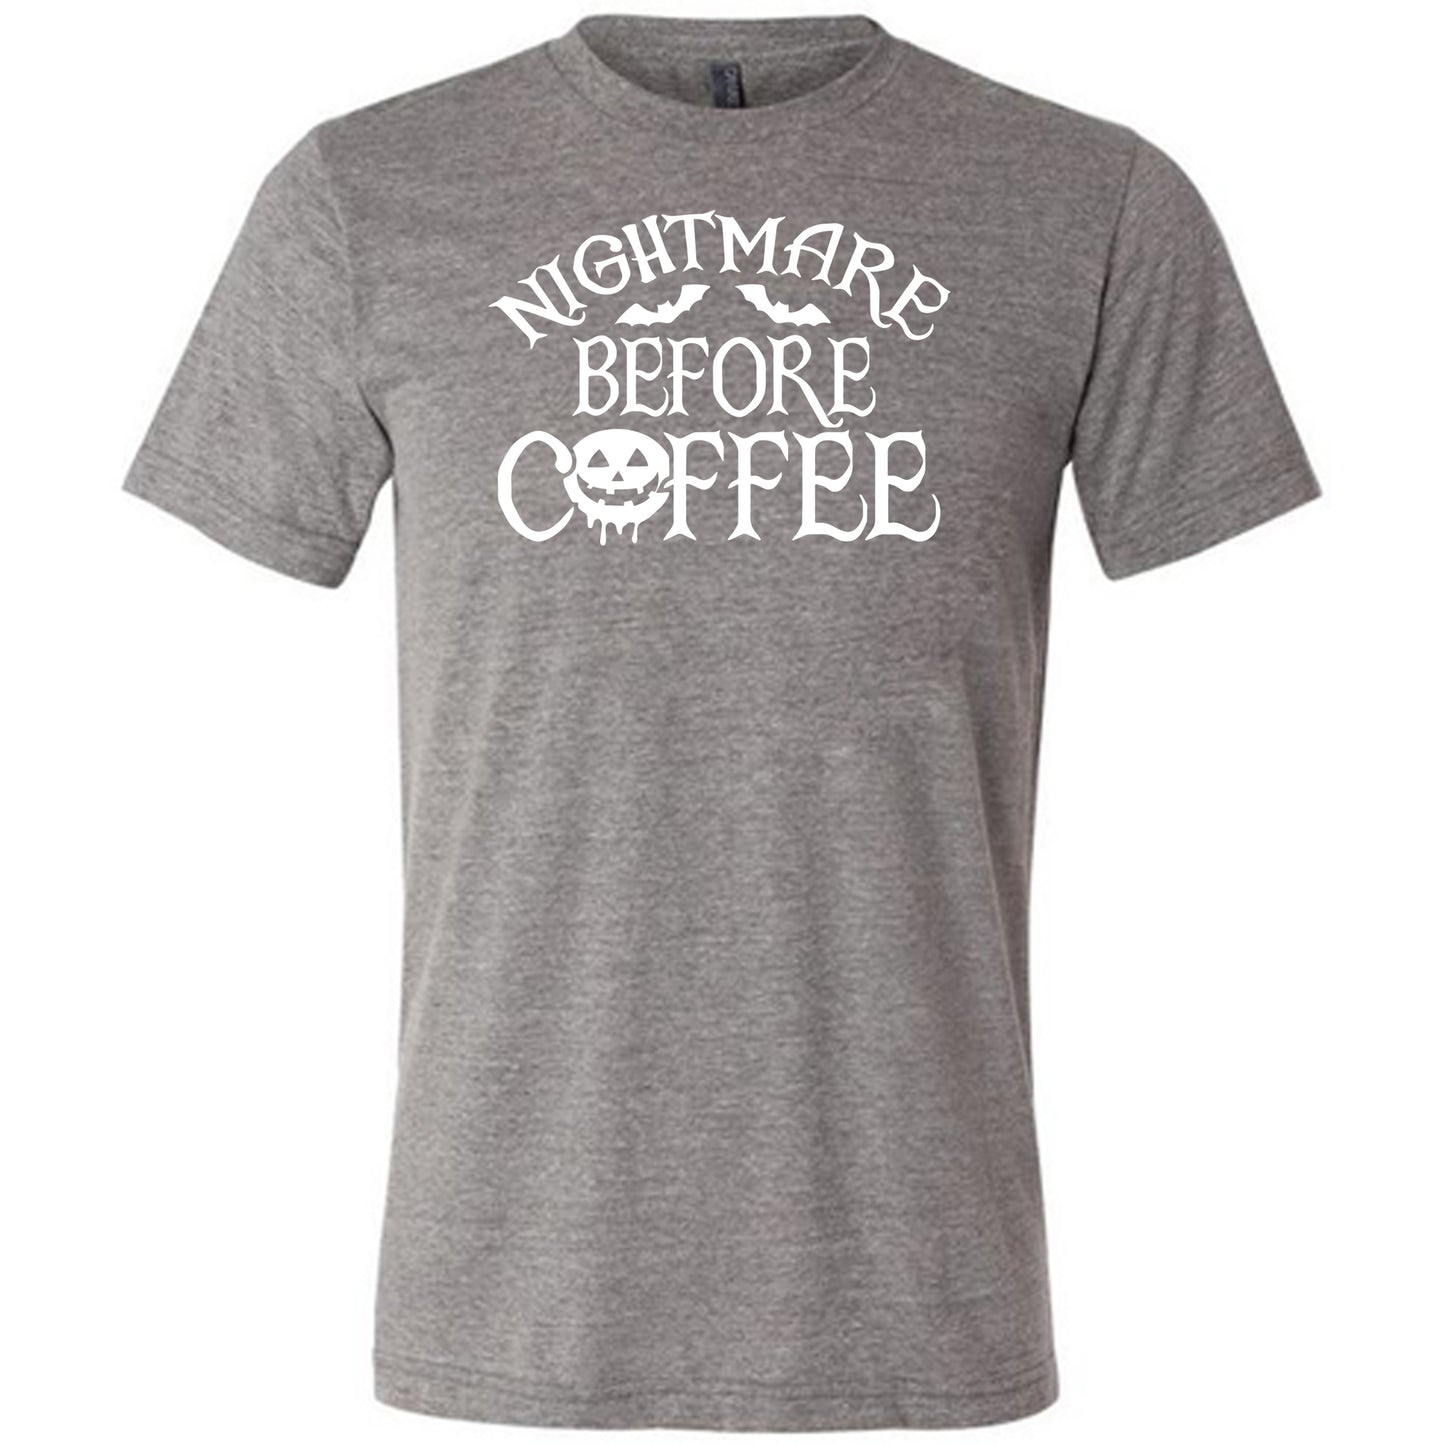 Nightmare Before Coffee unisex grey shirt